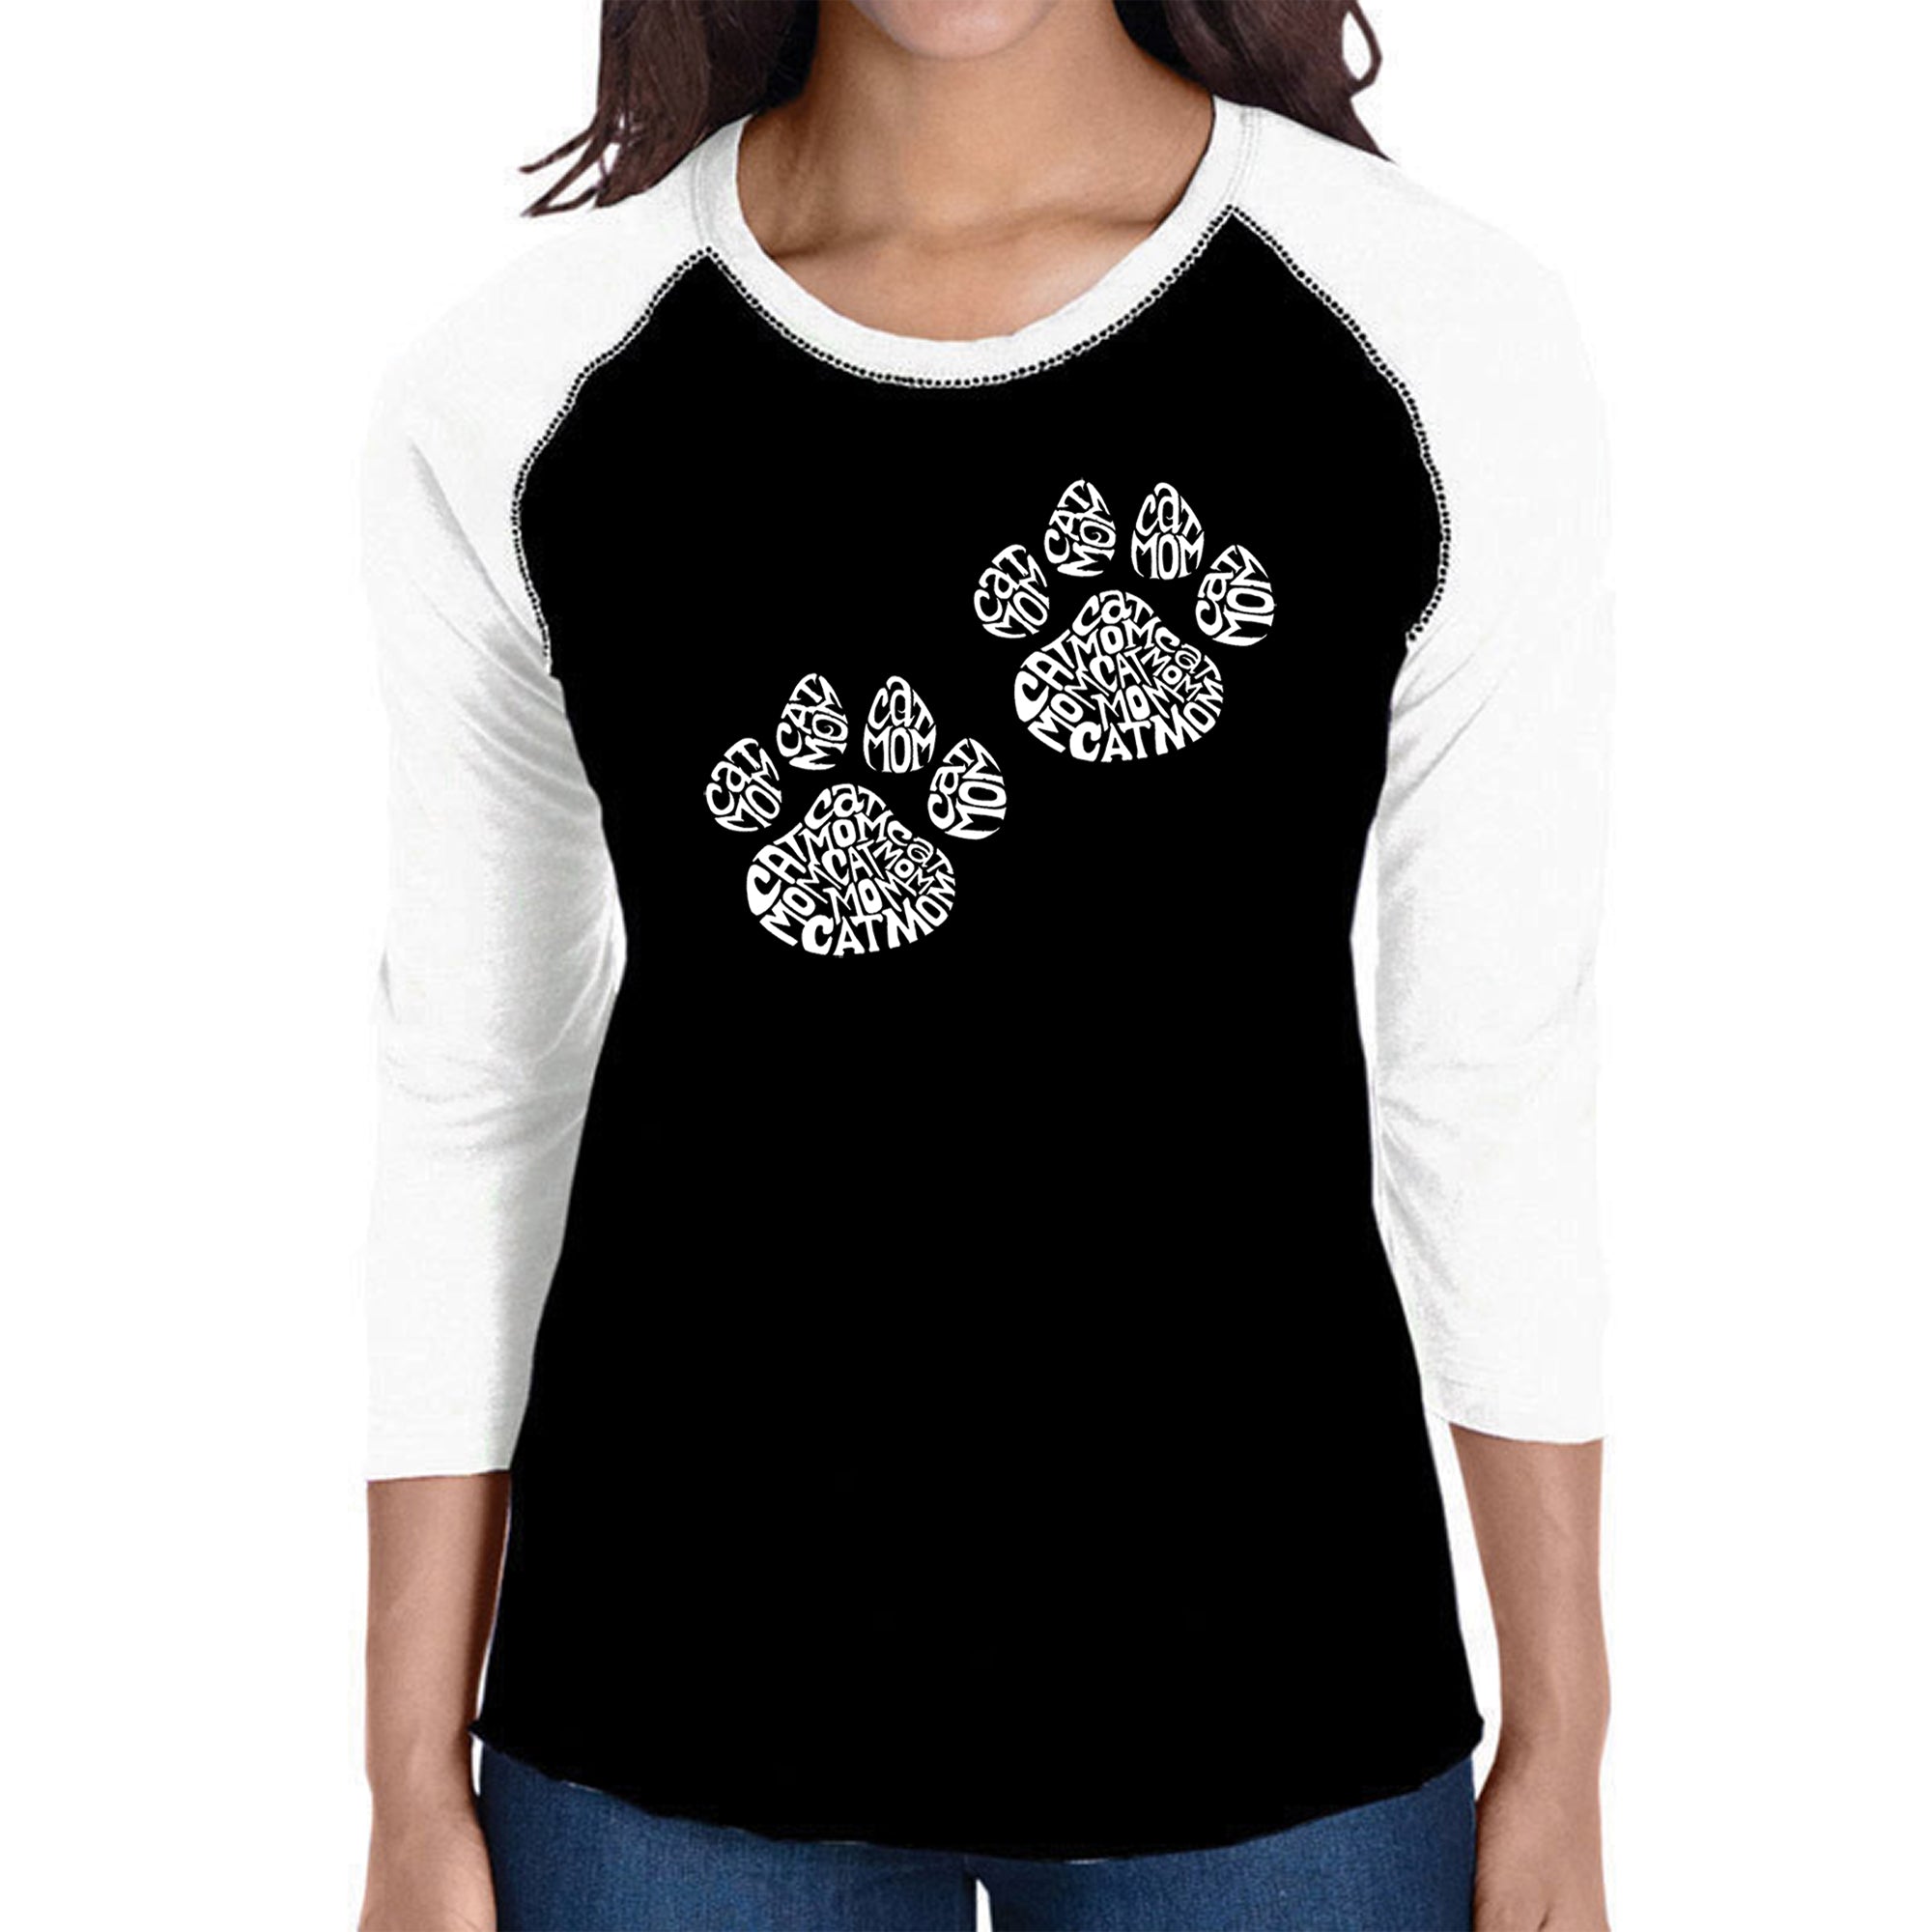 Cat Mom - Women's Raglan Baseball Word Art T-Shirt - Black/White - Large